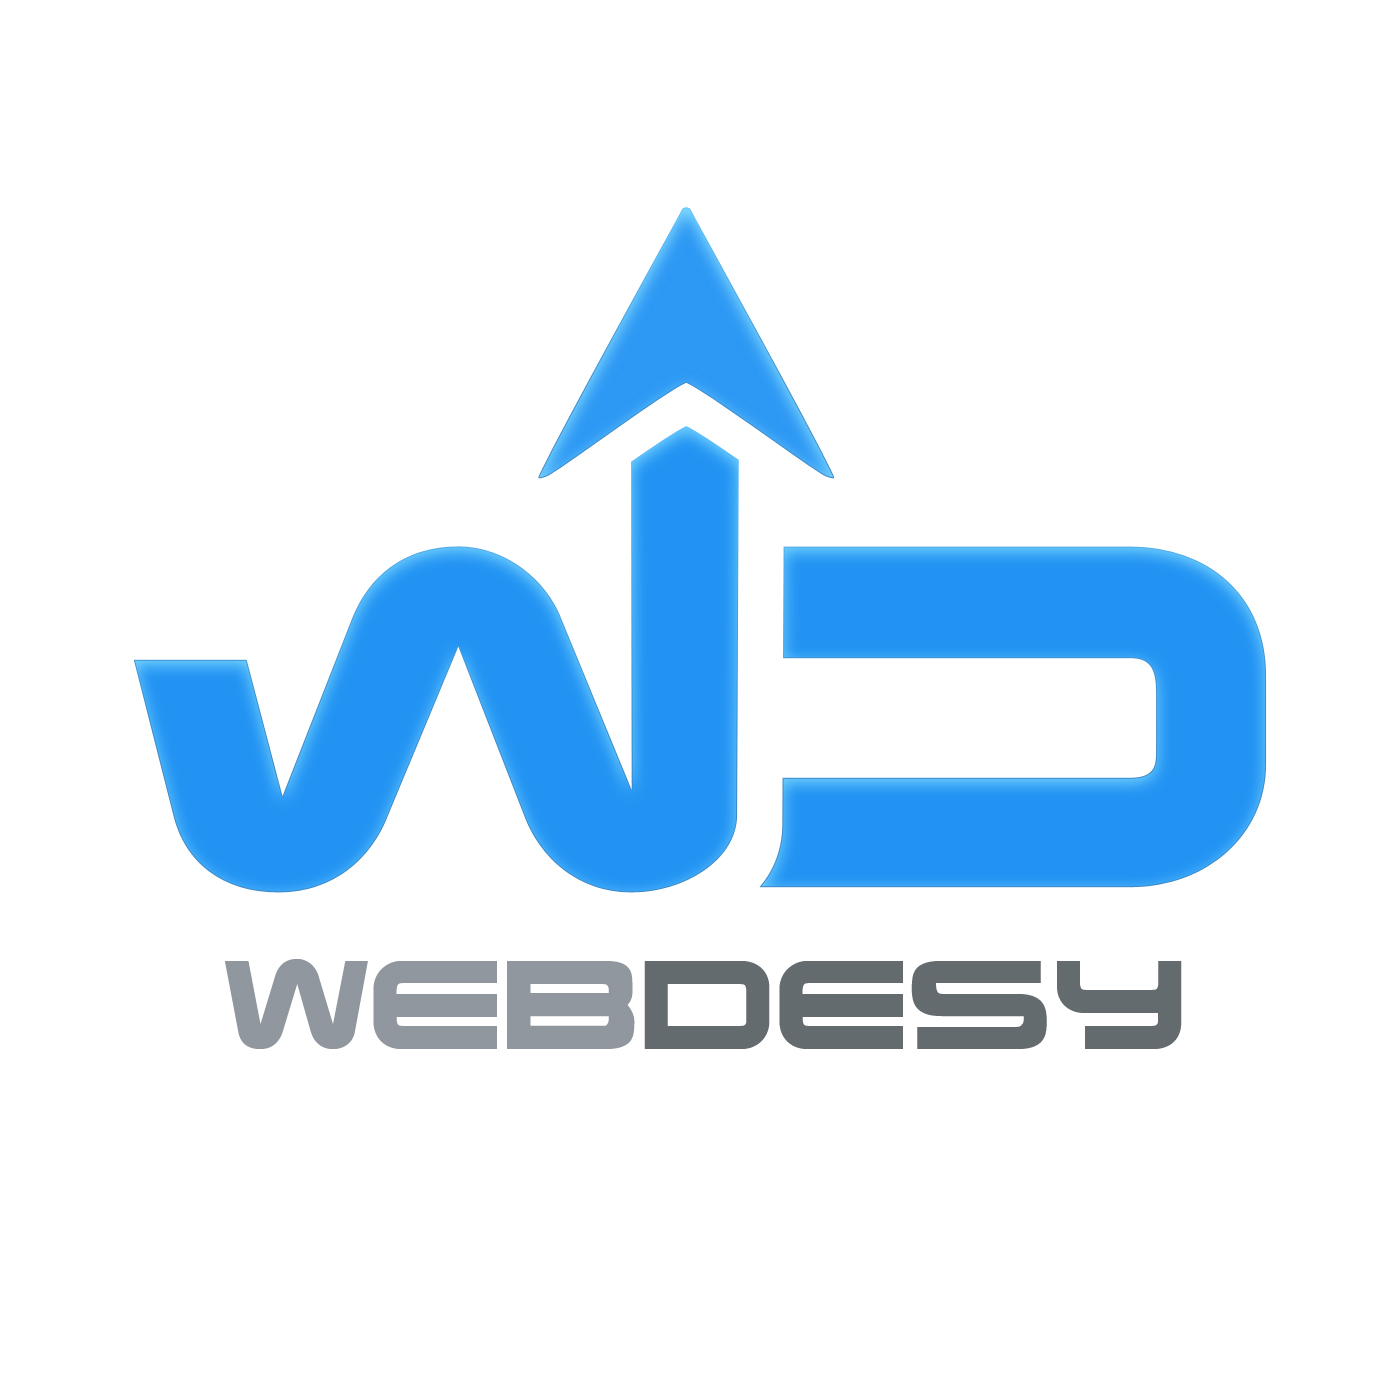 WebDesy Podcast